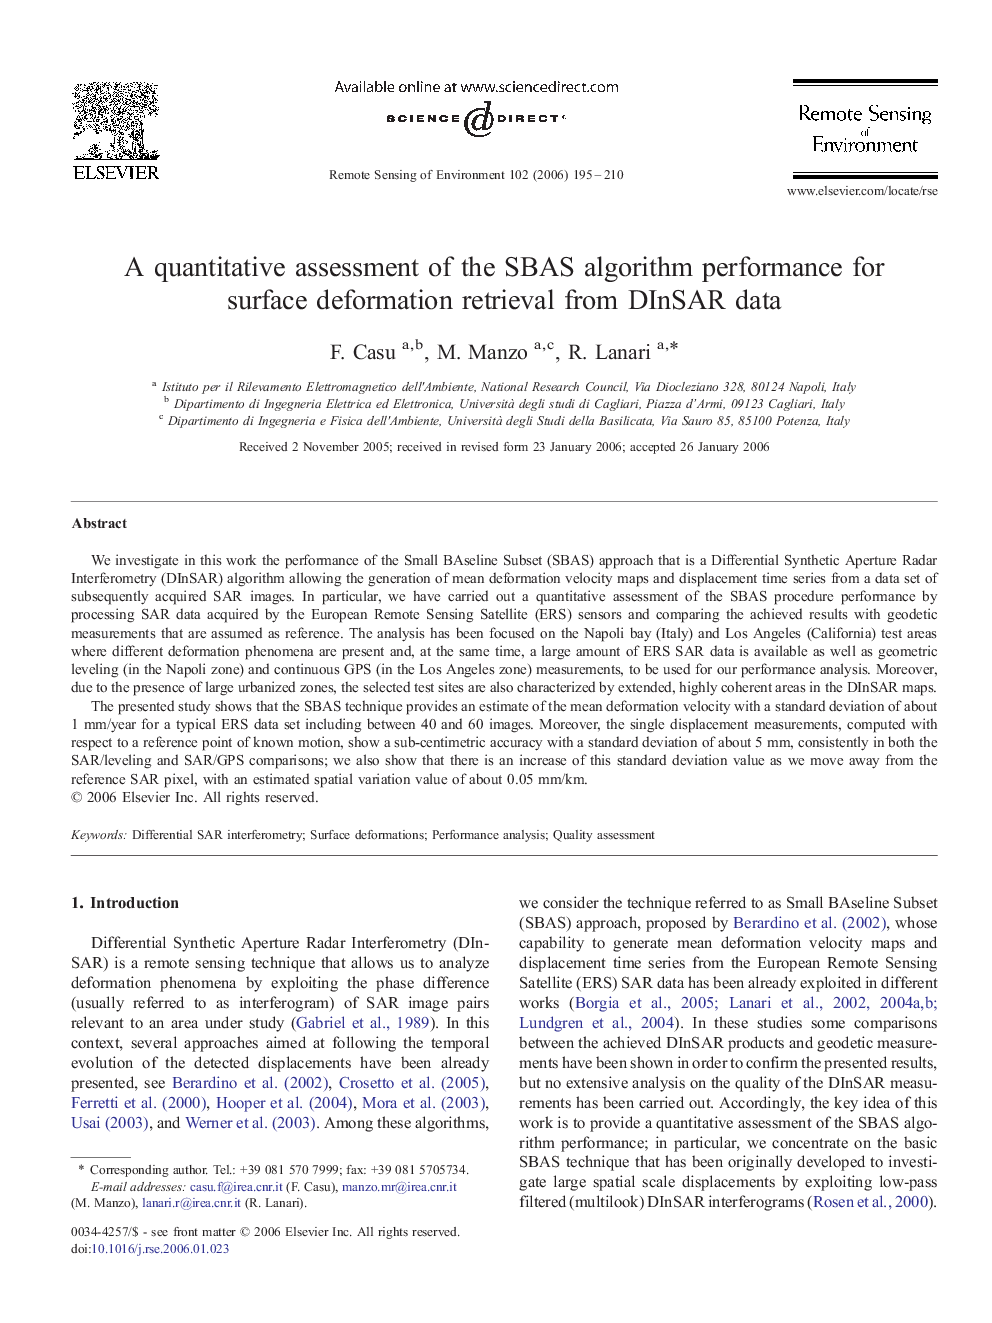 A quantitative assessment of the SBAS algorithm performance for surface deformation retrieval from DInSAR data